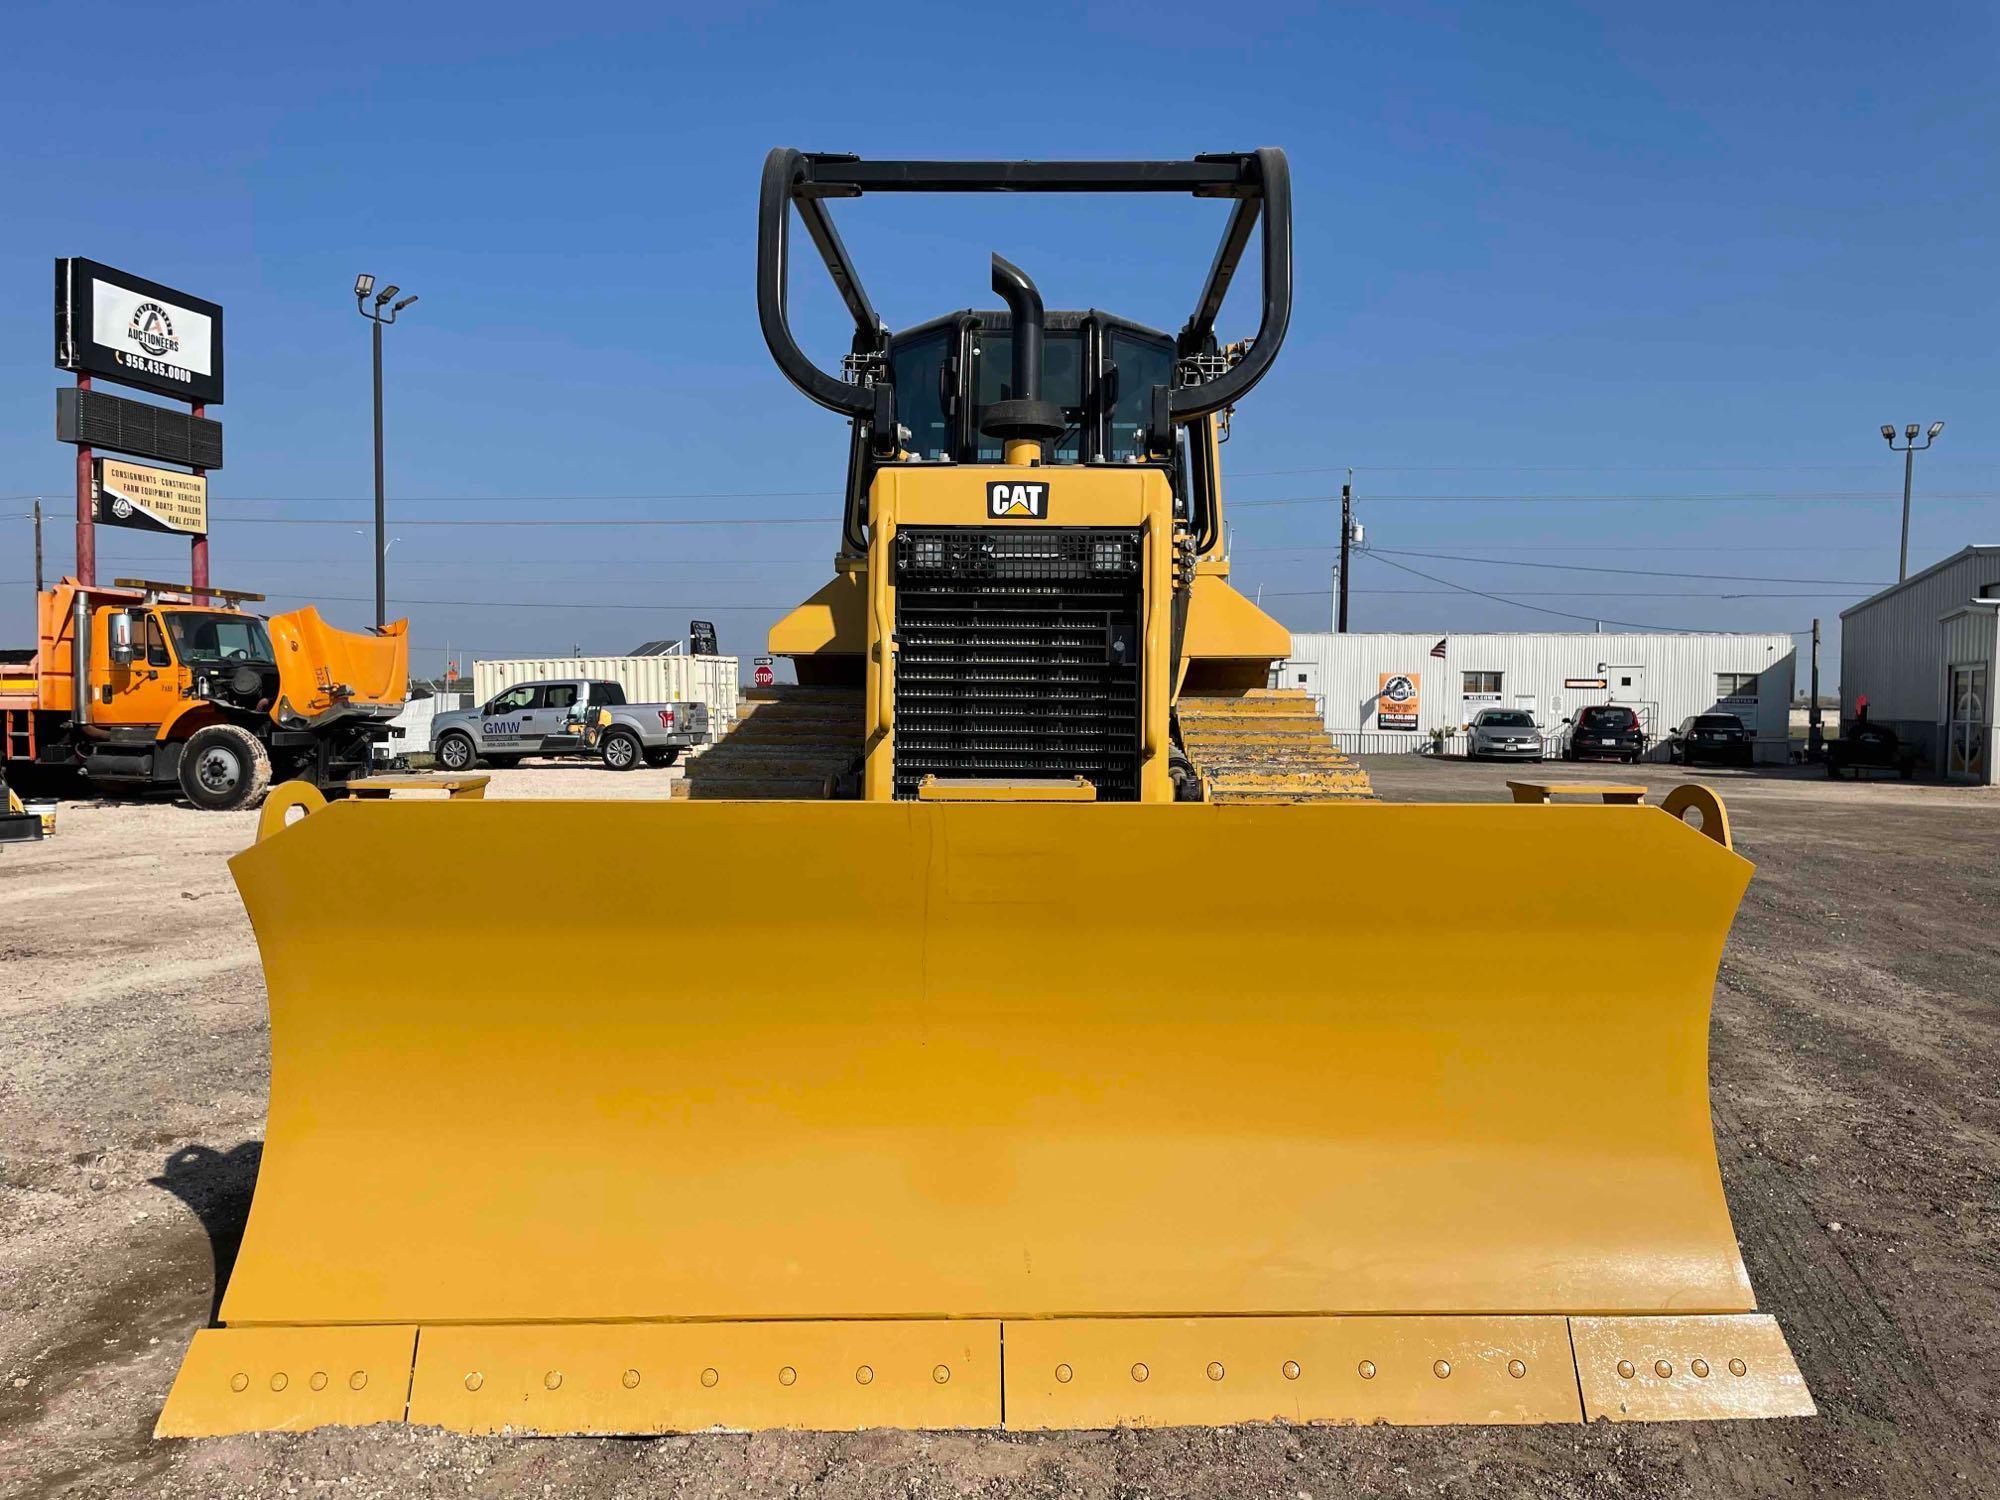 NEW/UNUSED 2019 Caterpillar D6N XL Crawler Tractor